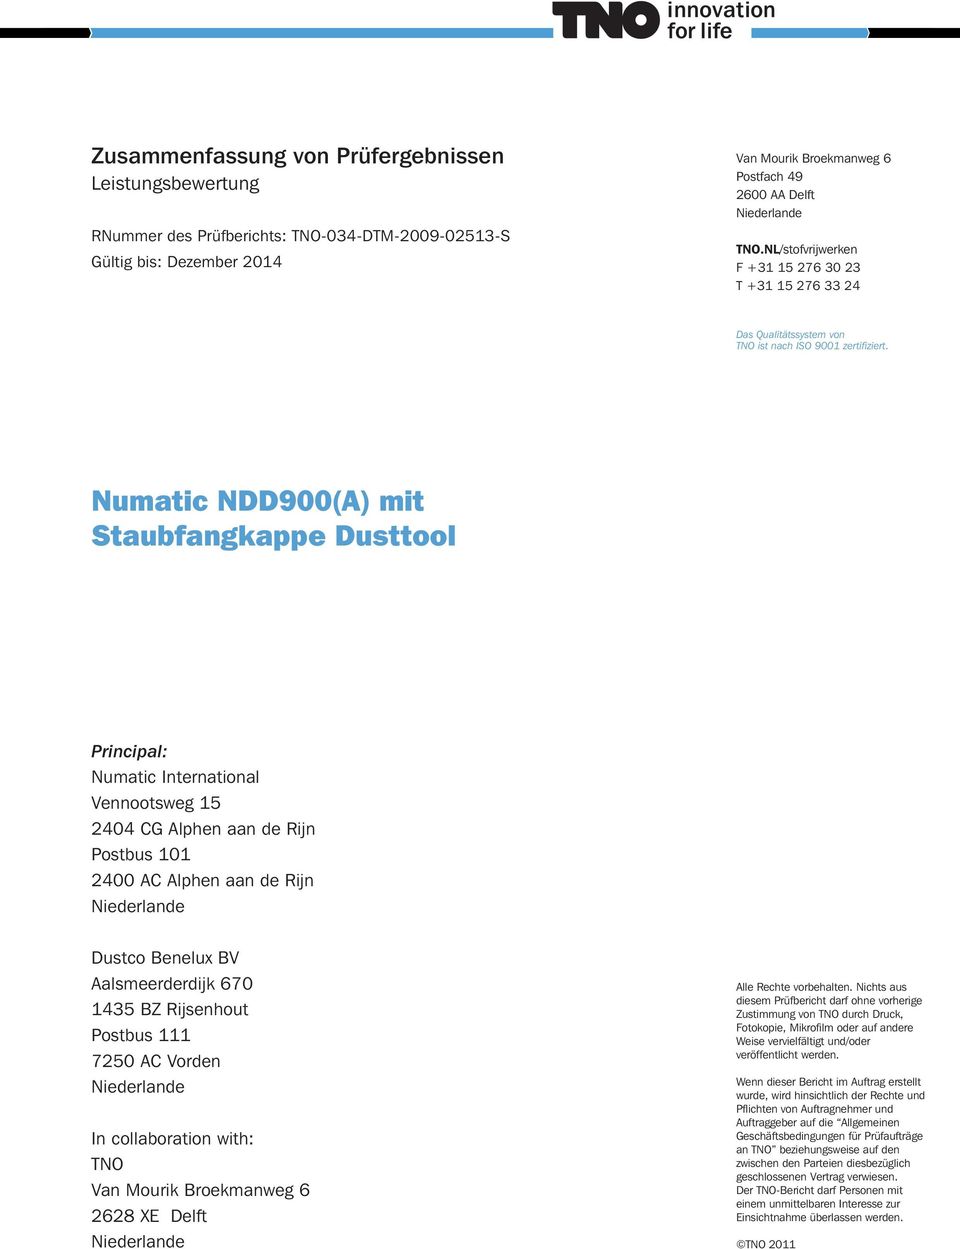 Numatic NDD900(A) mit Staubfangkappe Dusttool Principal: Numatic International Vennootsweg 15 2404 CG Alphen aan de Rijn Postbus 101 2400 AC Alphen aan de Rijn Dustco Benelux BV Aalsmeerderdijk 670